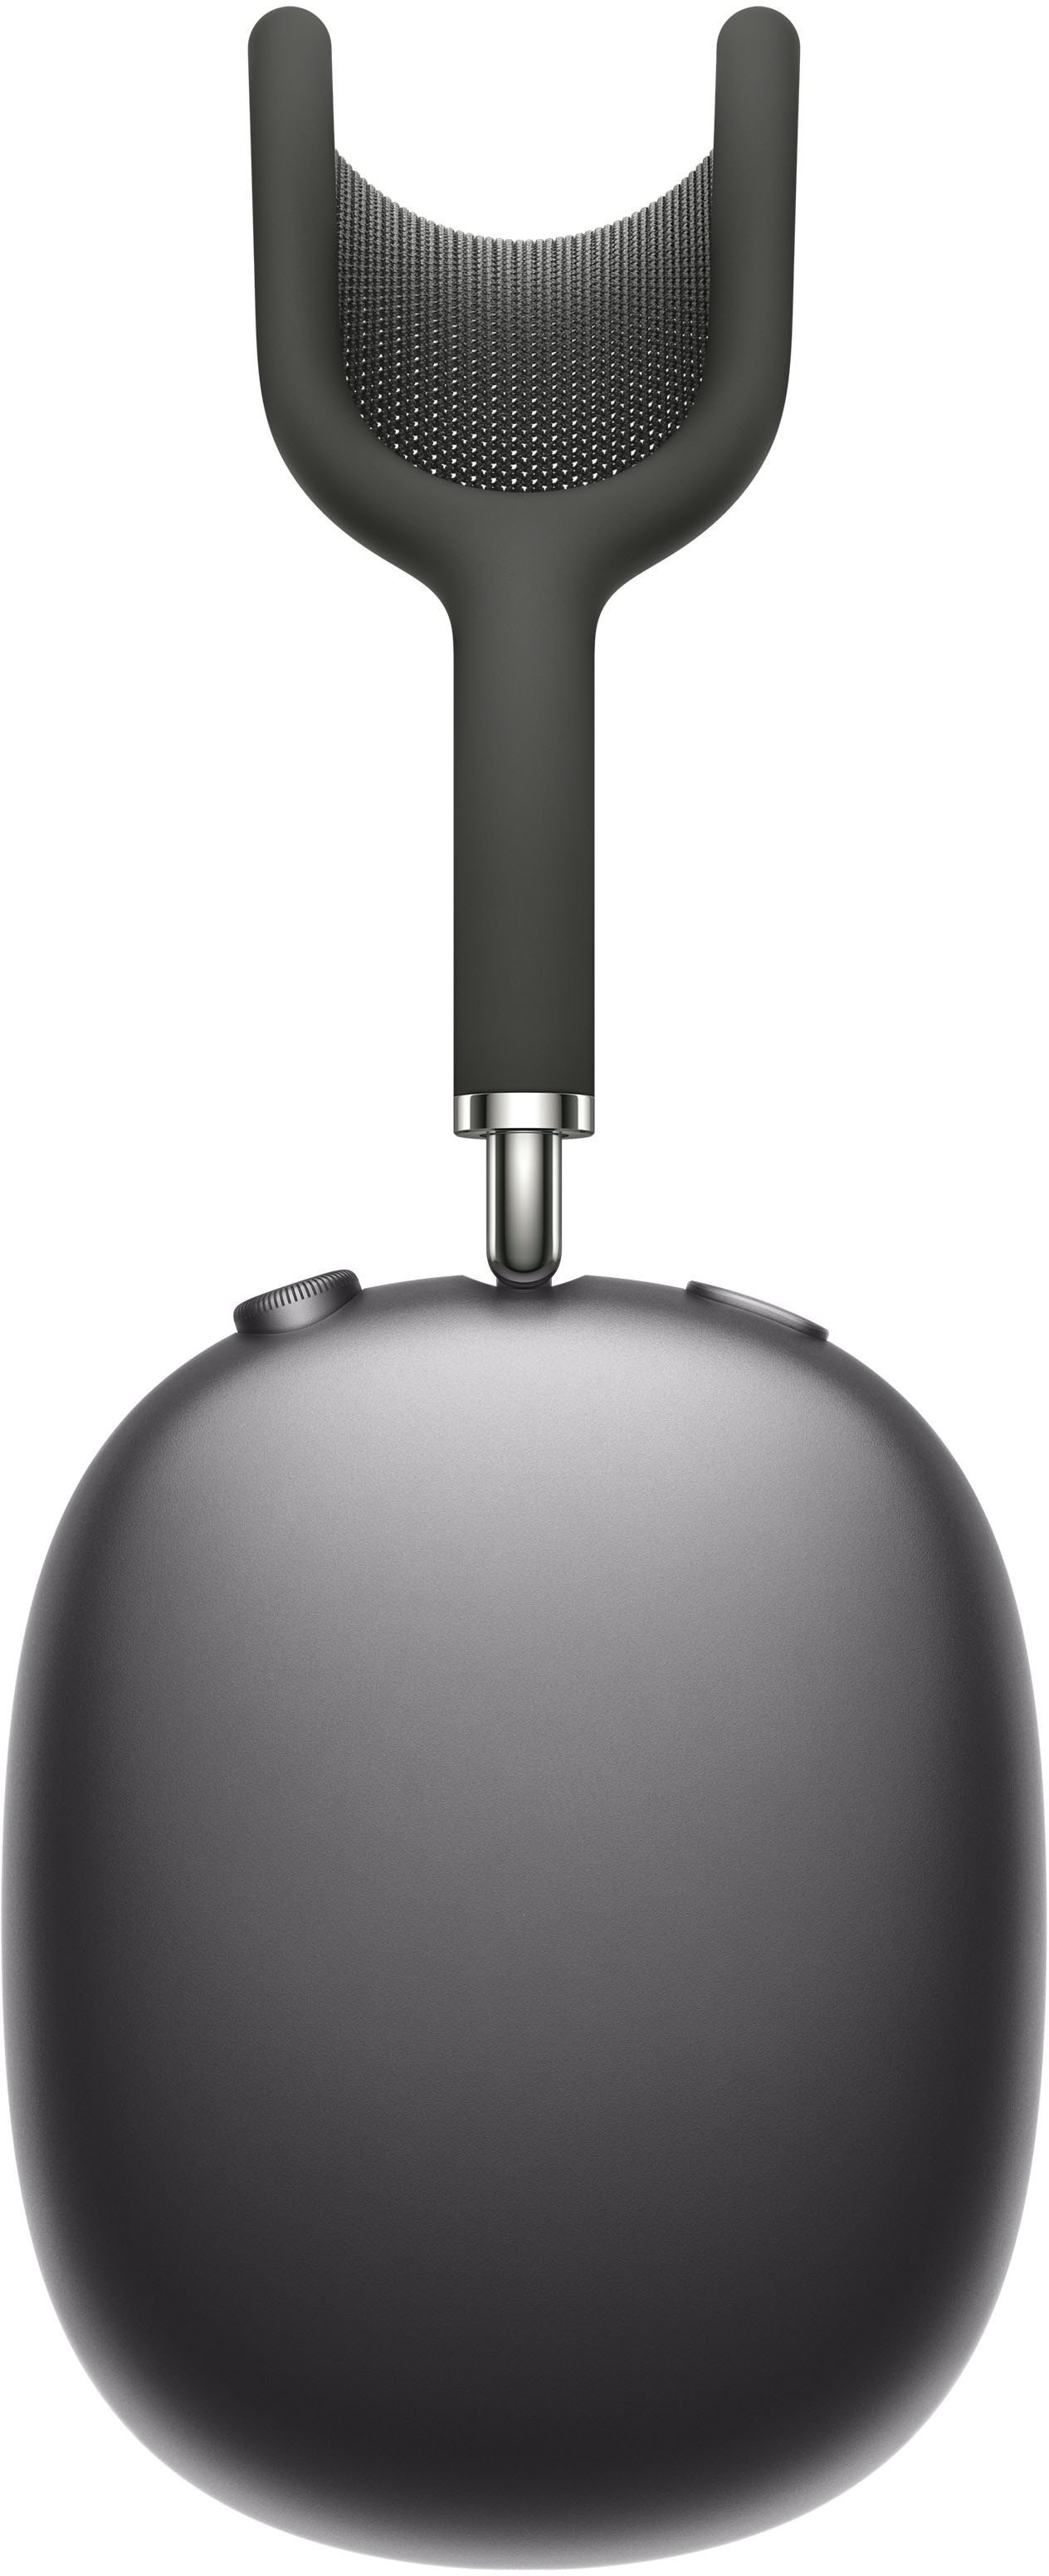 Apple AirPods Max, Space Grey - Wireless Headphones | alza.de